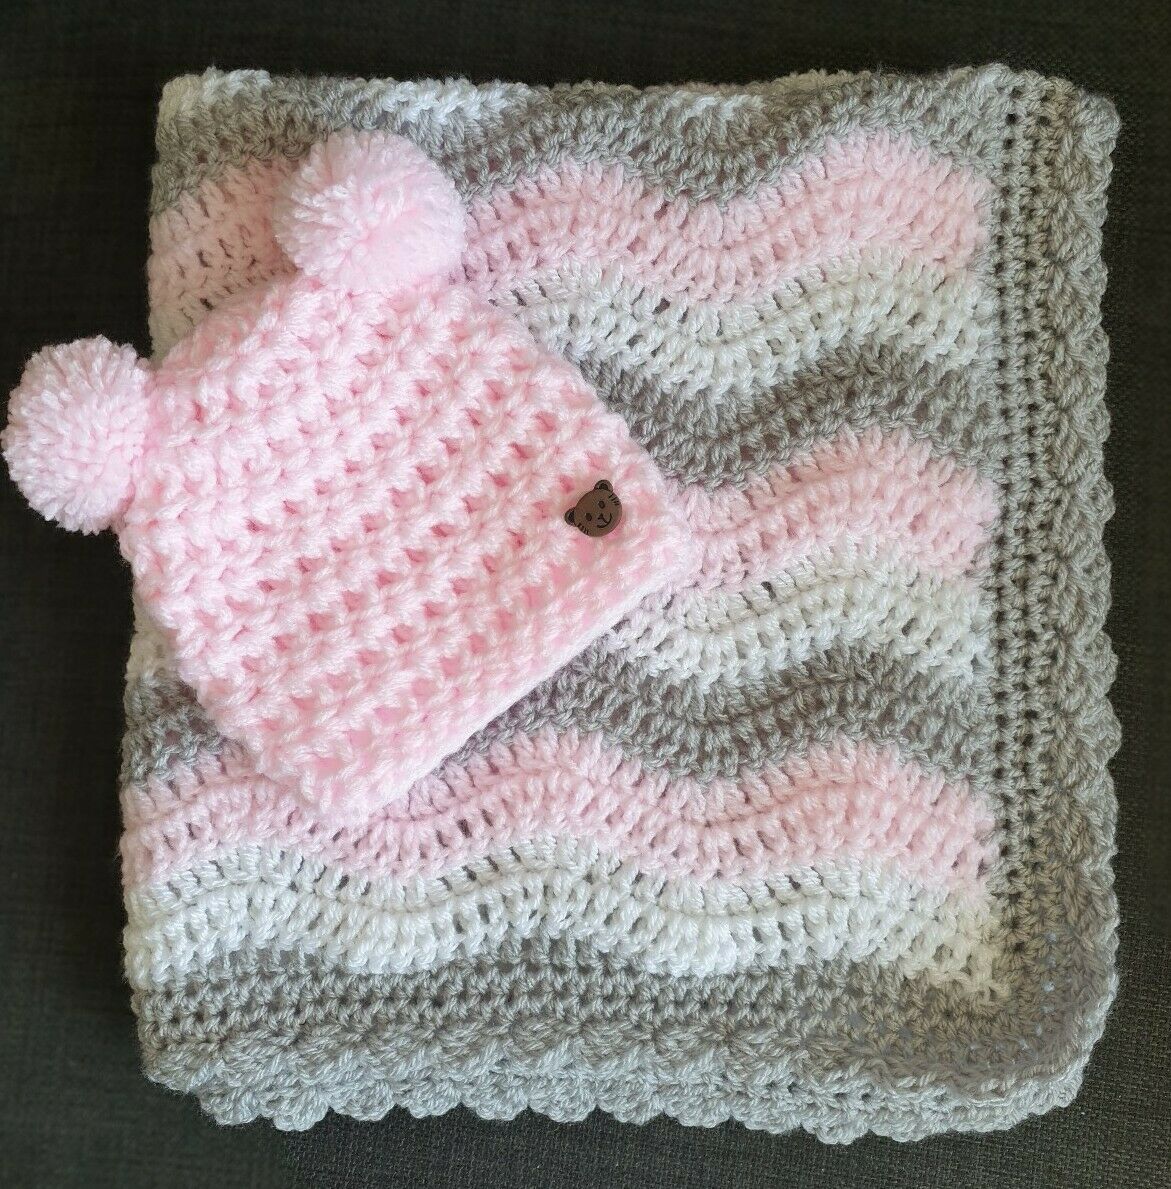 #earlybiz Handmade crochet ripple baby blanket + bear pompom hat - white/grey/pink. ebay.co.uk/itm/1539048662… #Baby #giftideas